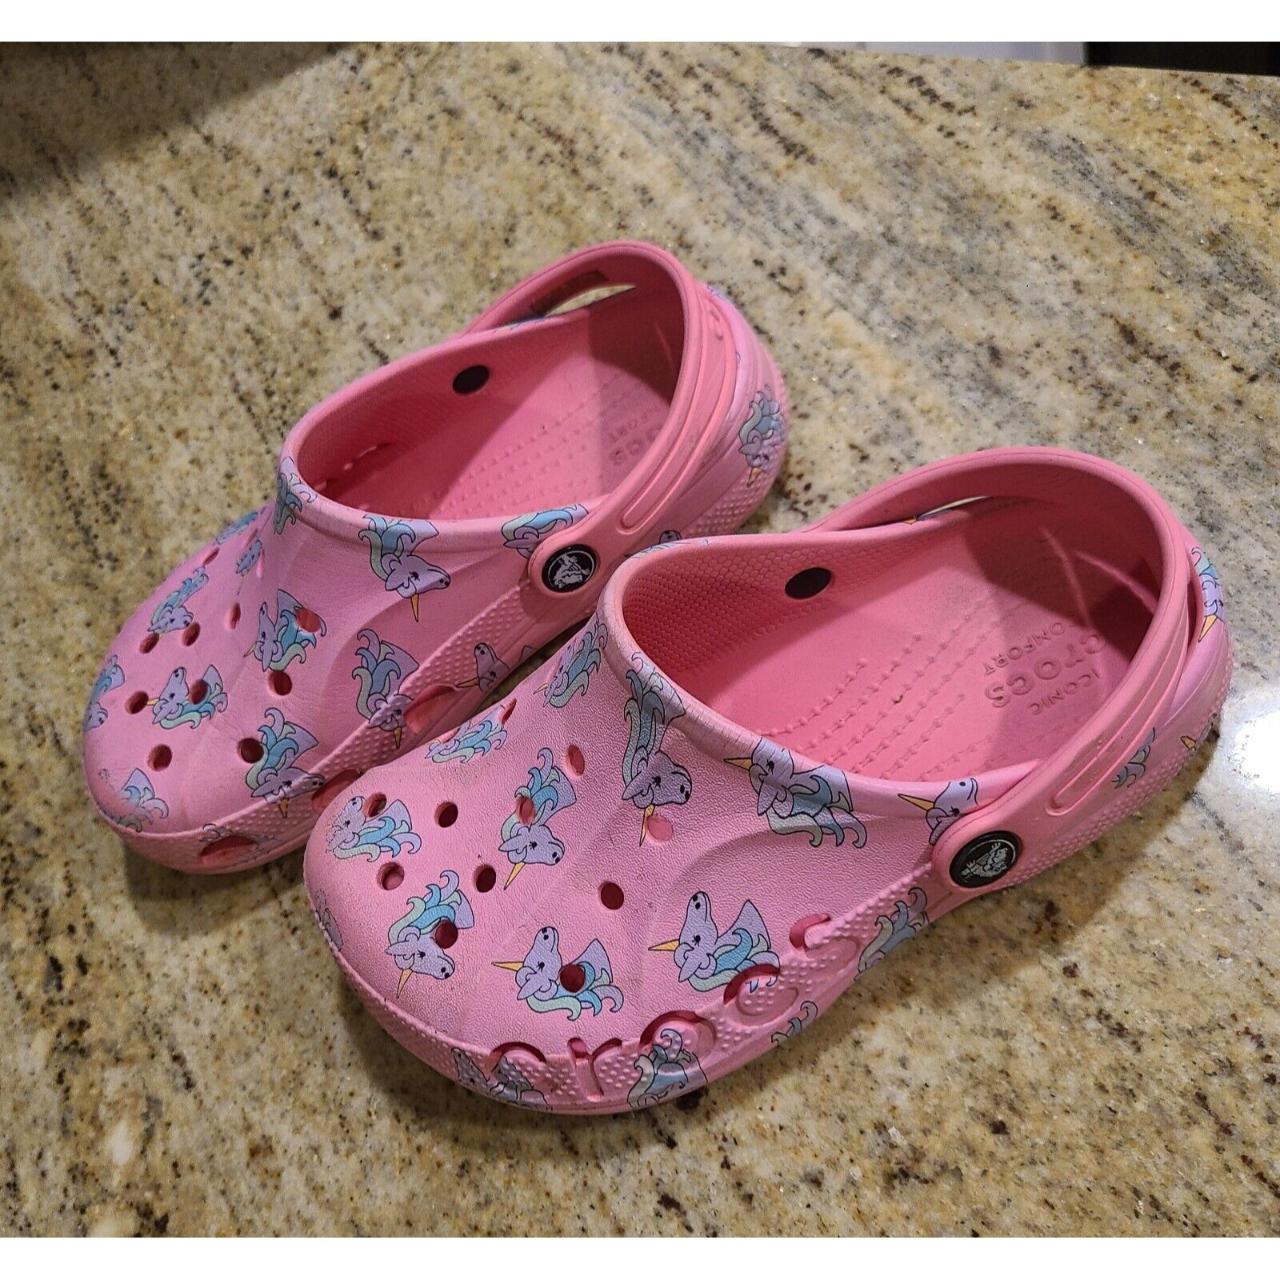 Crocs Youth Size J3 Shoes Pink Purple Unicorn... - Depop